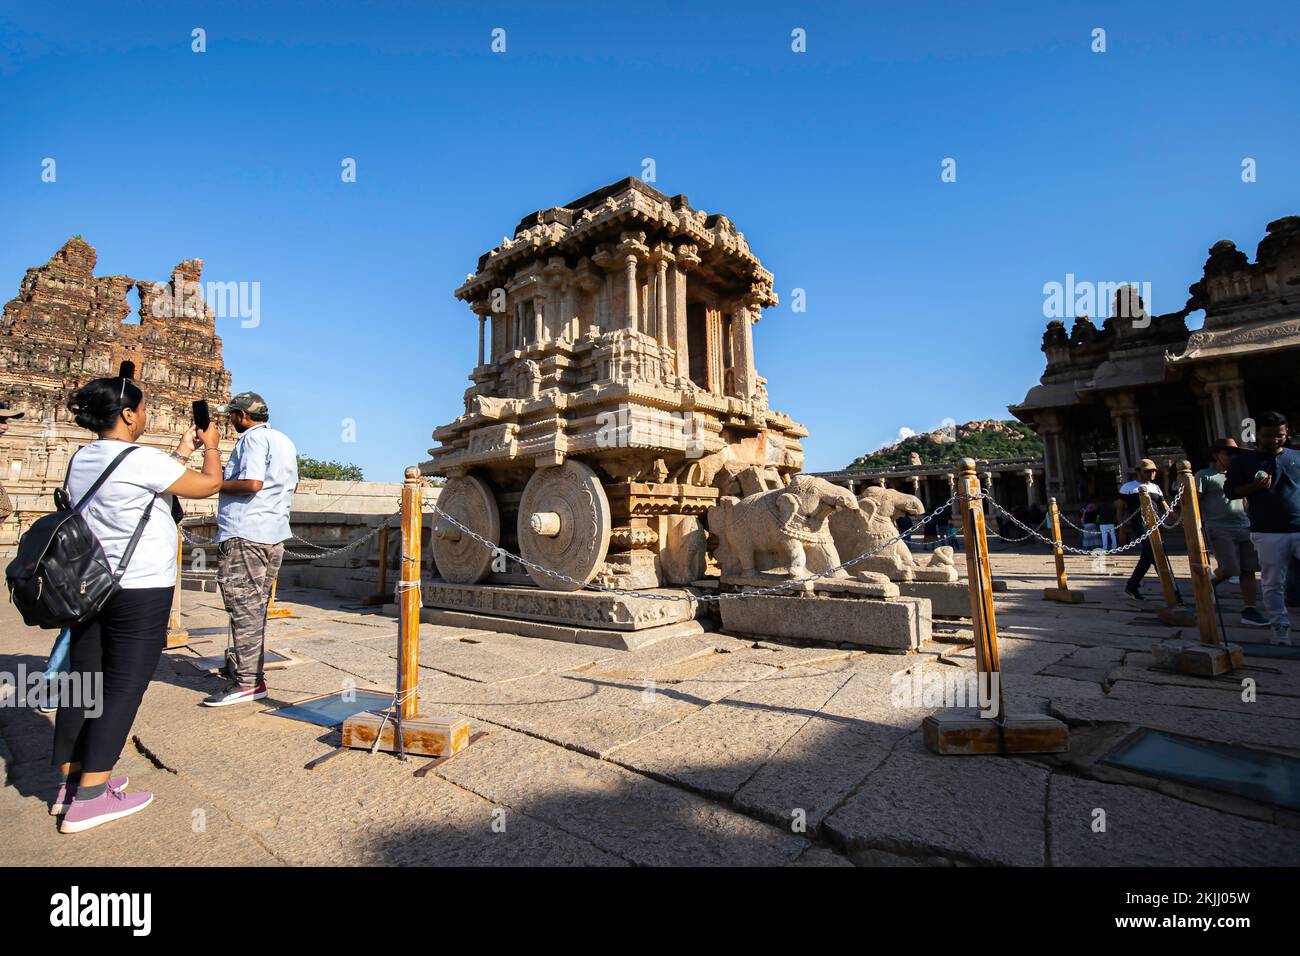 Karnataka’s tourism icon...The Stone Chariot, Hampi. Built by King Krishnadevaraya of Vijayanagara Empire during 16th century, Stock Photo